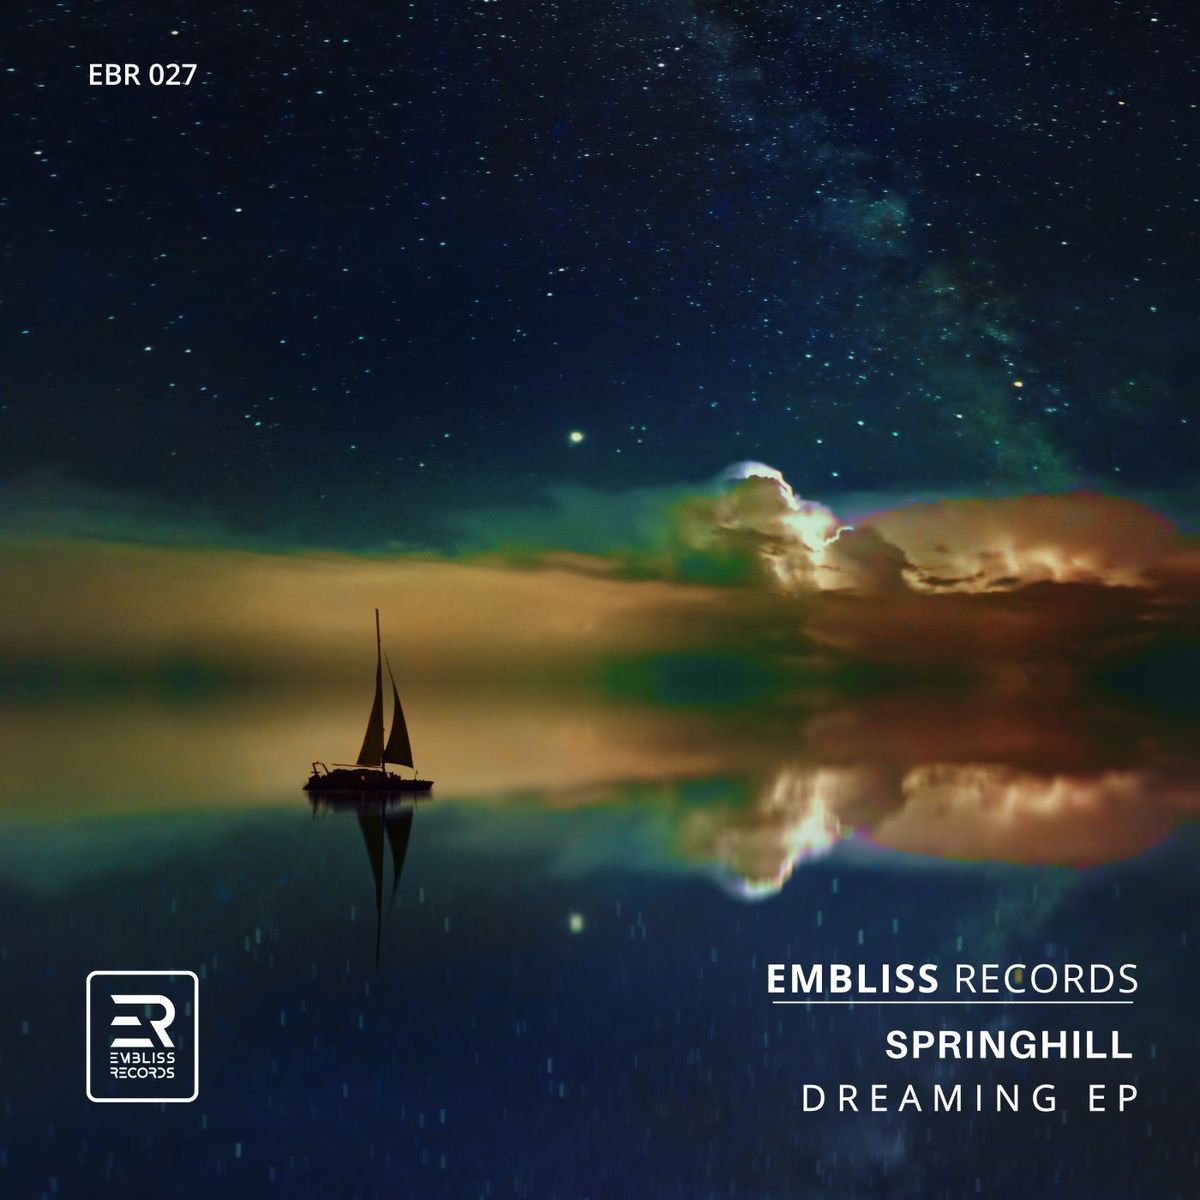 SpringHill - Dreaming EP [EBR027]